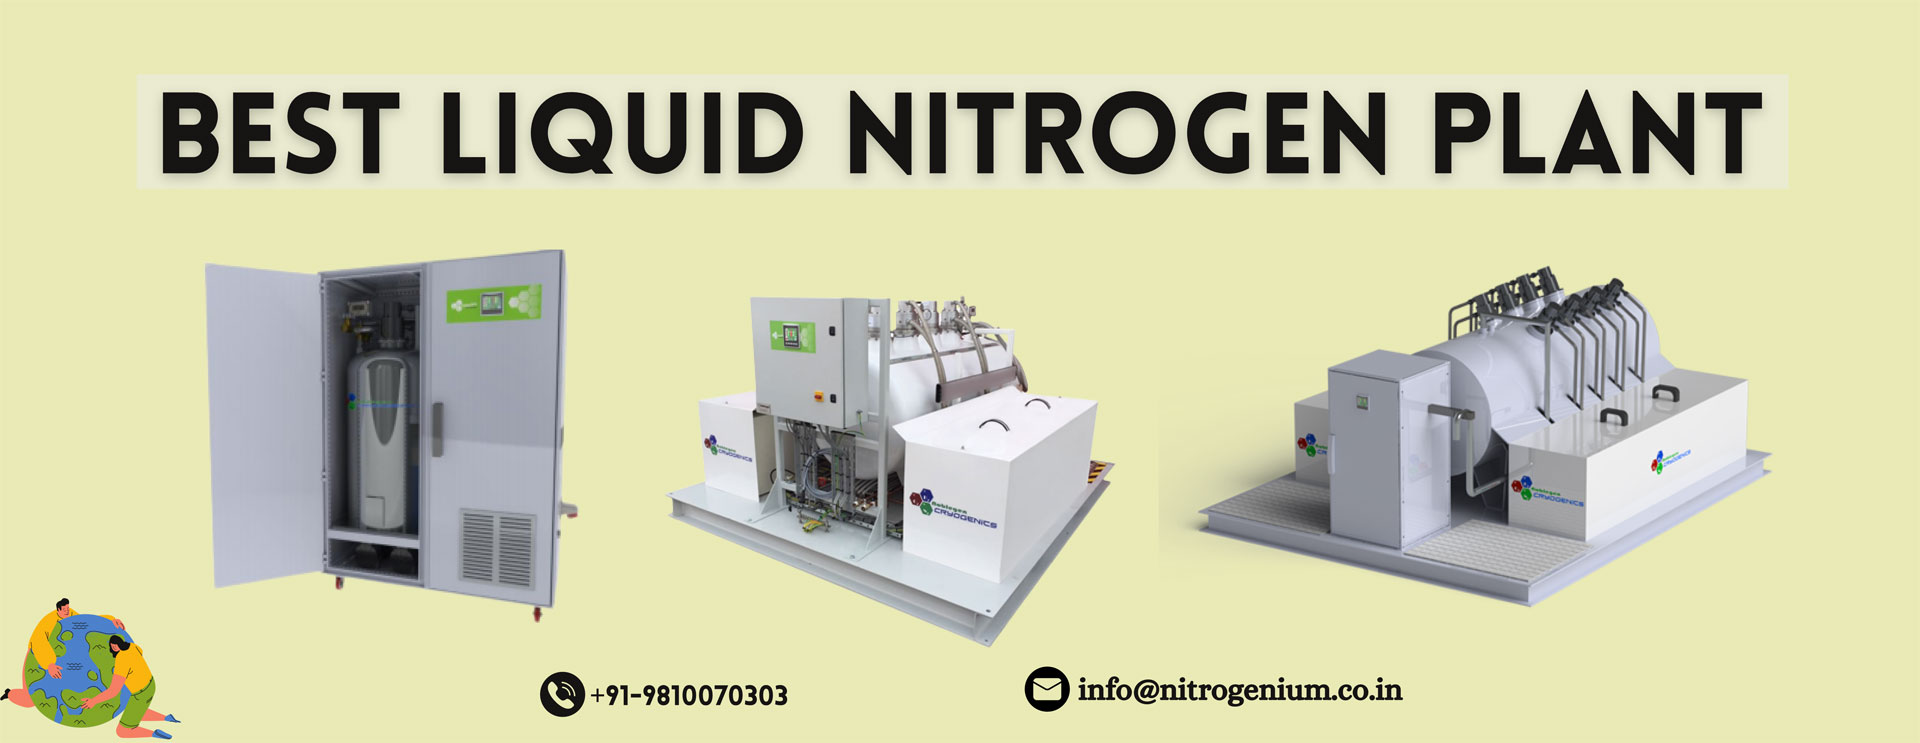 Best Liquid Nitrogen Plant